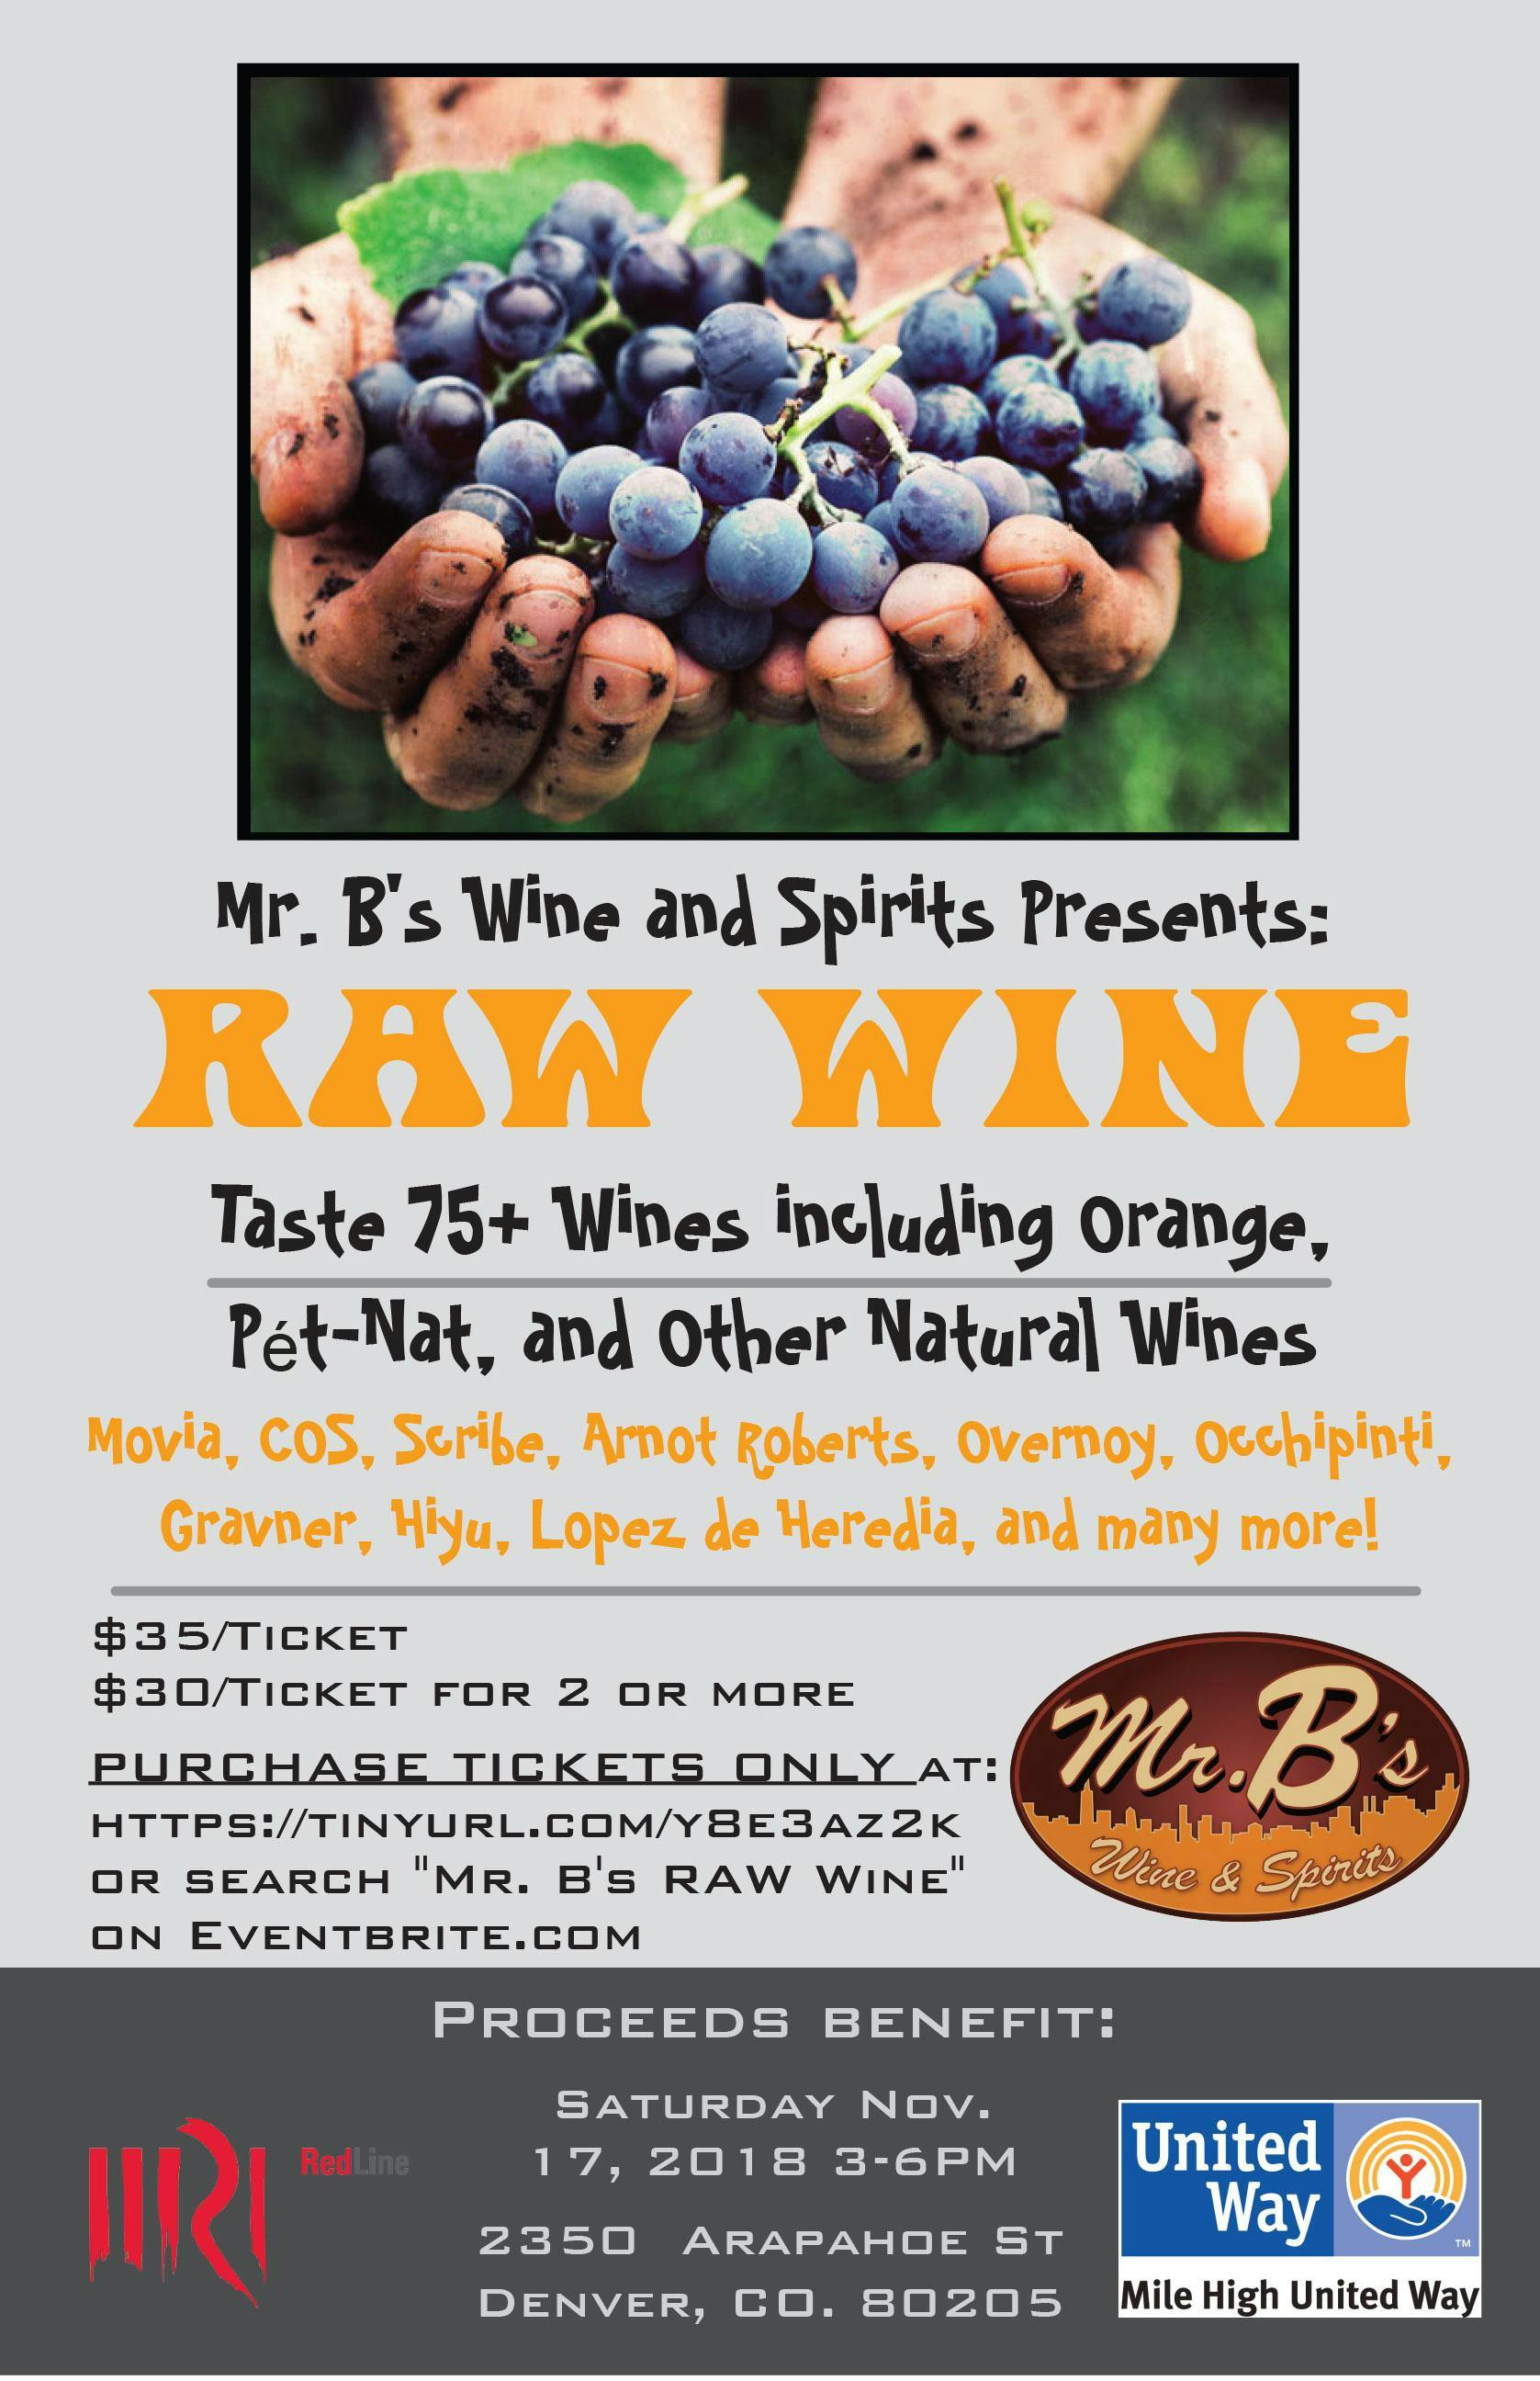 Mr. B's Wine and Spirits Presents: Raw Wine - A Natural Wine Tasting